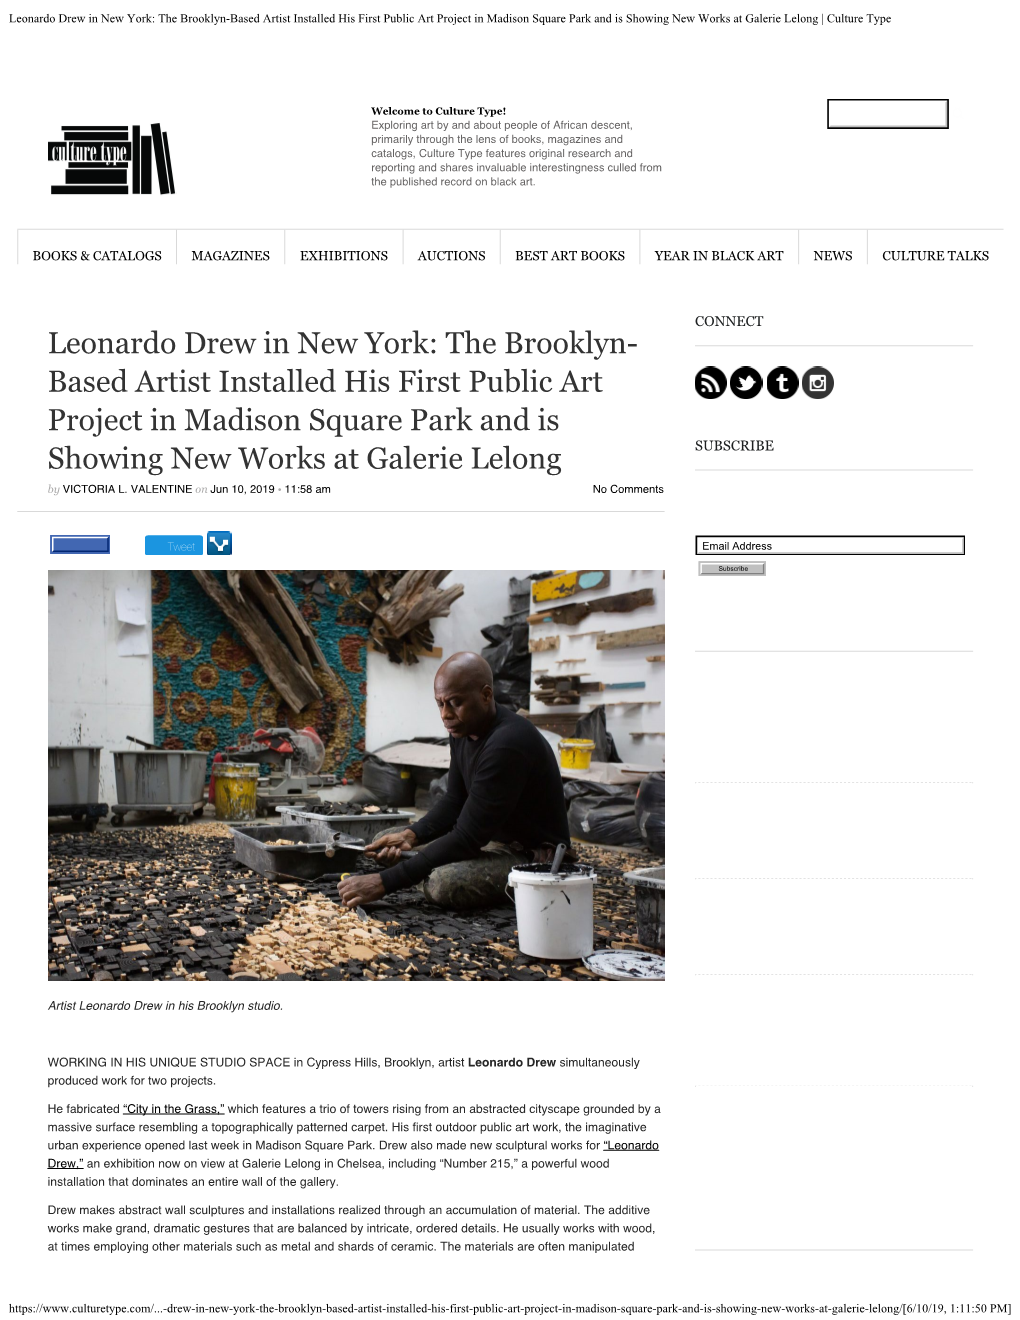 Leonardo Drew in New York: the Brooklyn-Based Artist Installed His